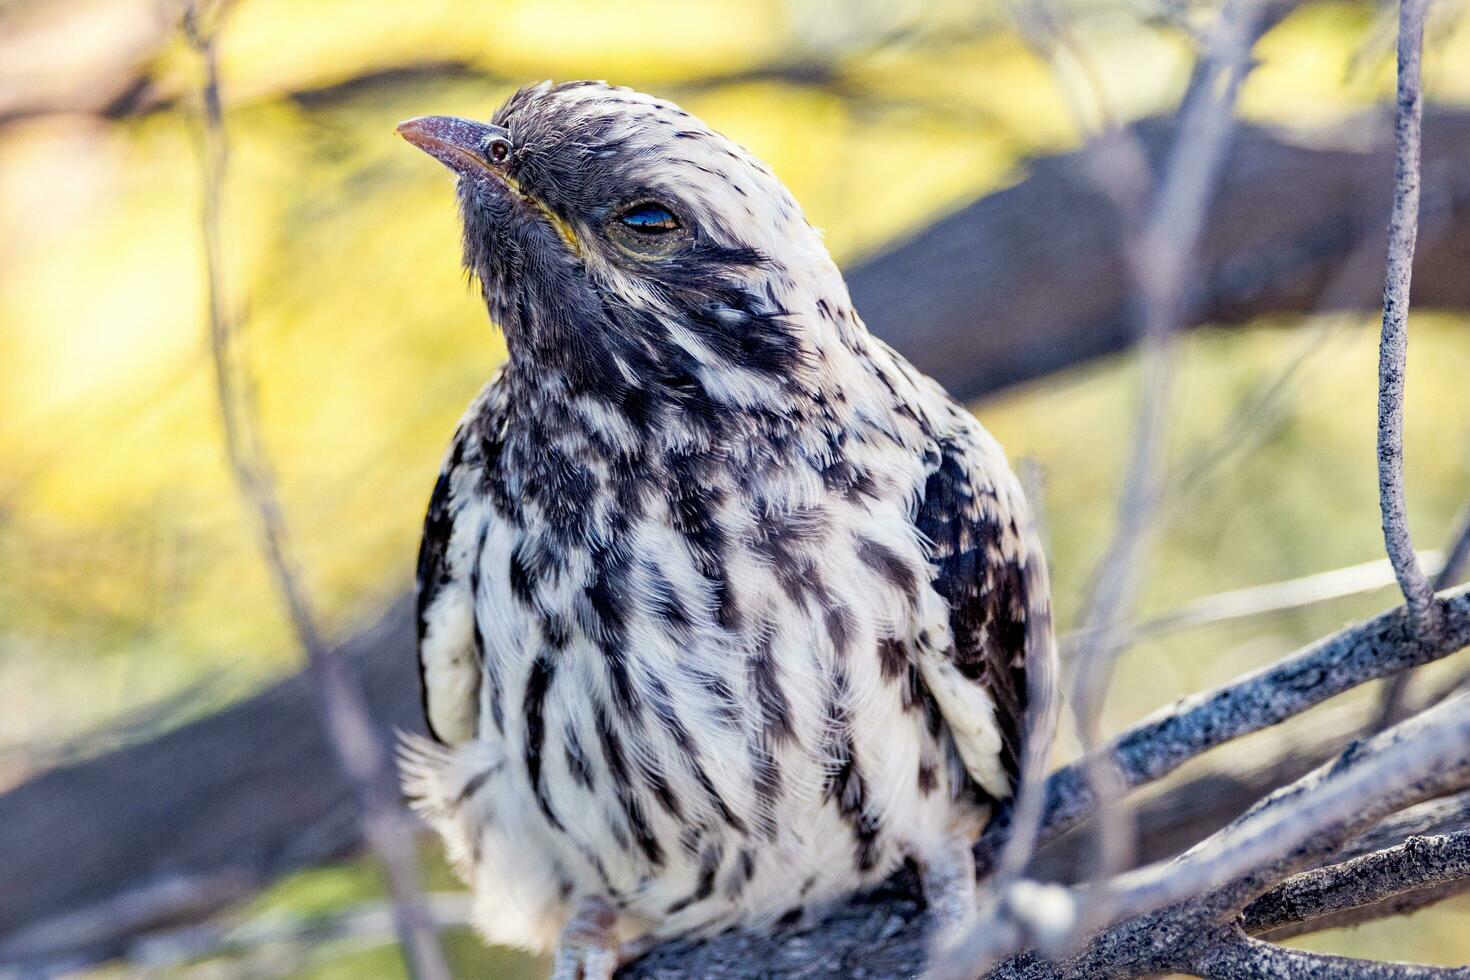 Pallid Cuckoo in Australia photo